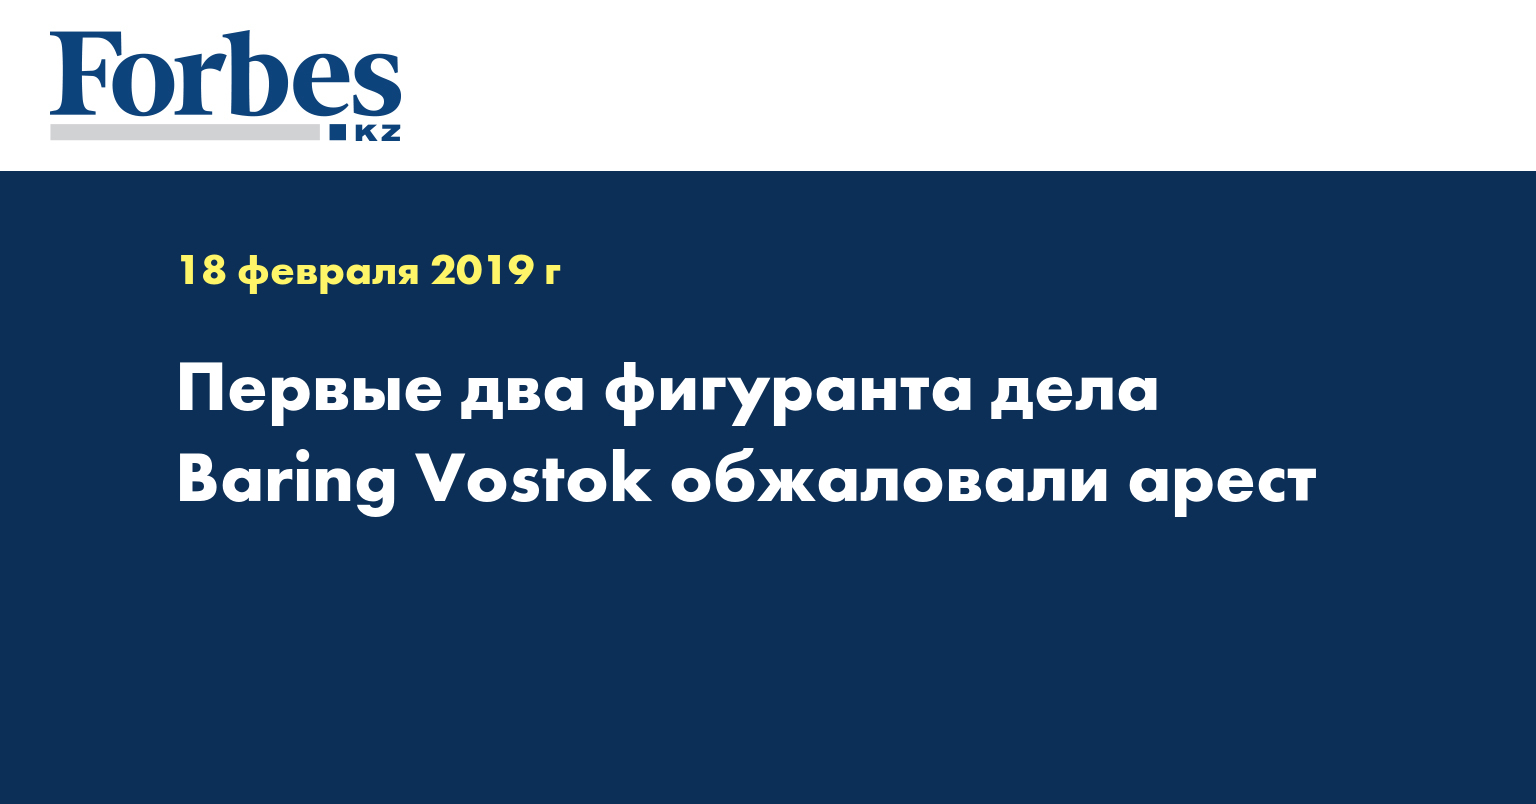 Первые два фигуранта дела Baring Vostok обжаловали арест